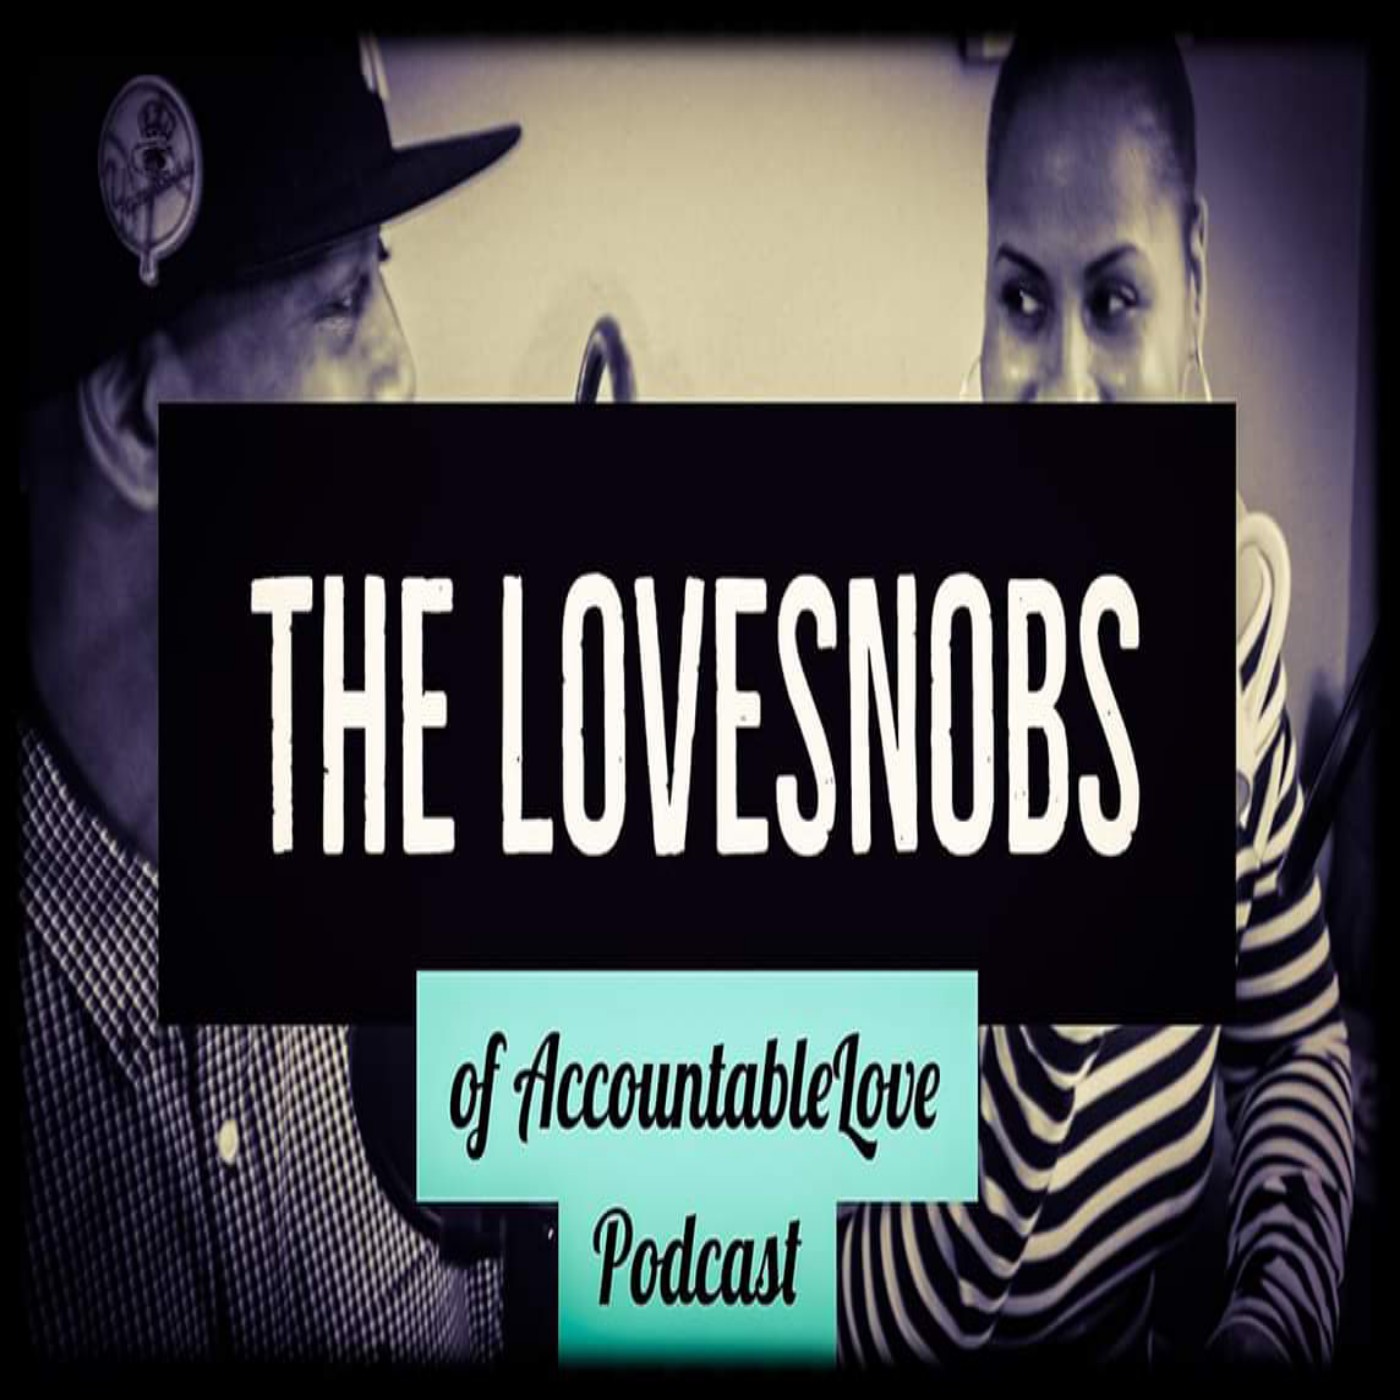 The AccountableLove Podcast